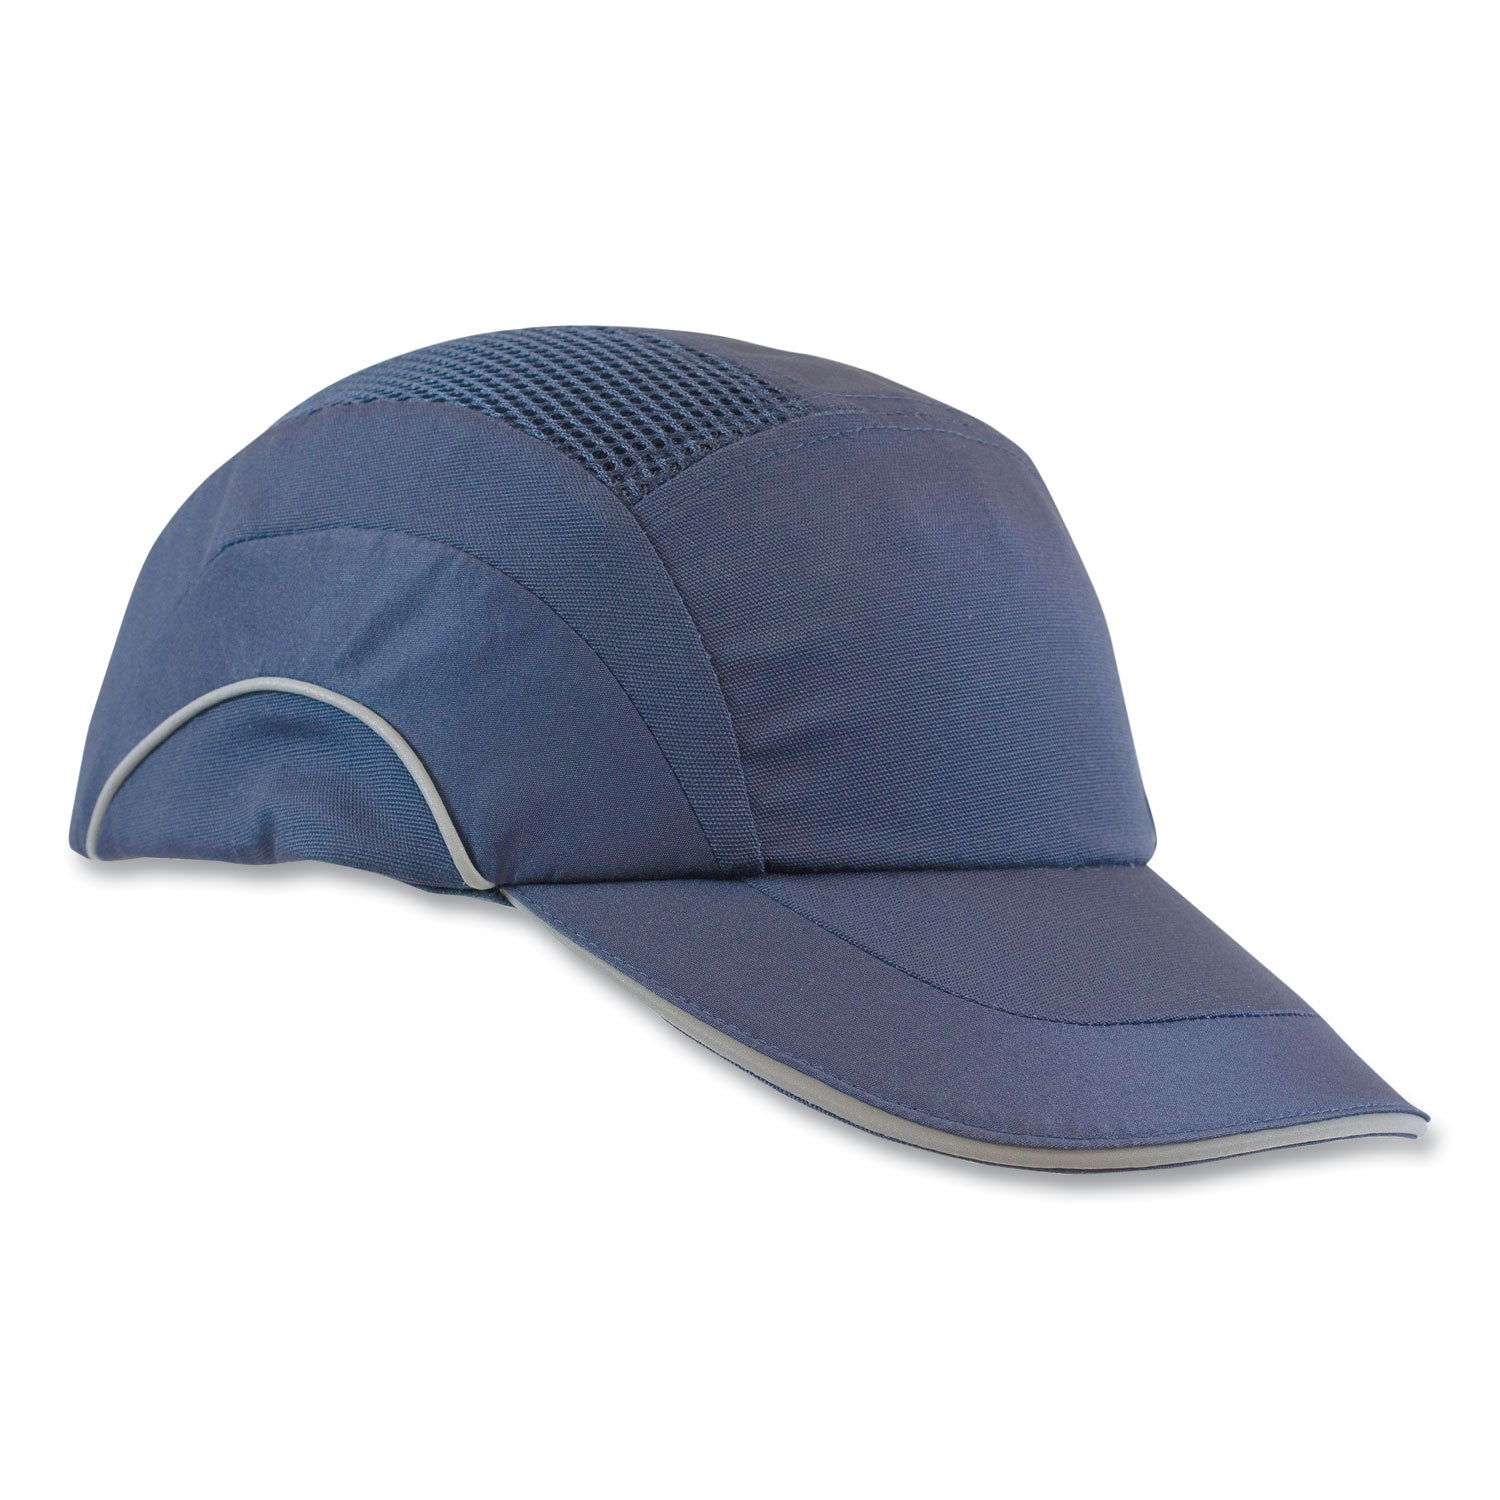 hardcap-a1+-baseball-style-bump-cap-275-brim-navy-blue_pid282abr17021 - 1